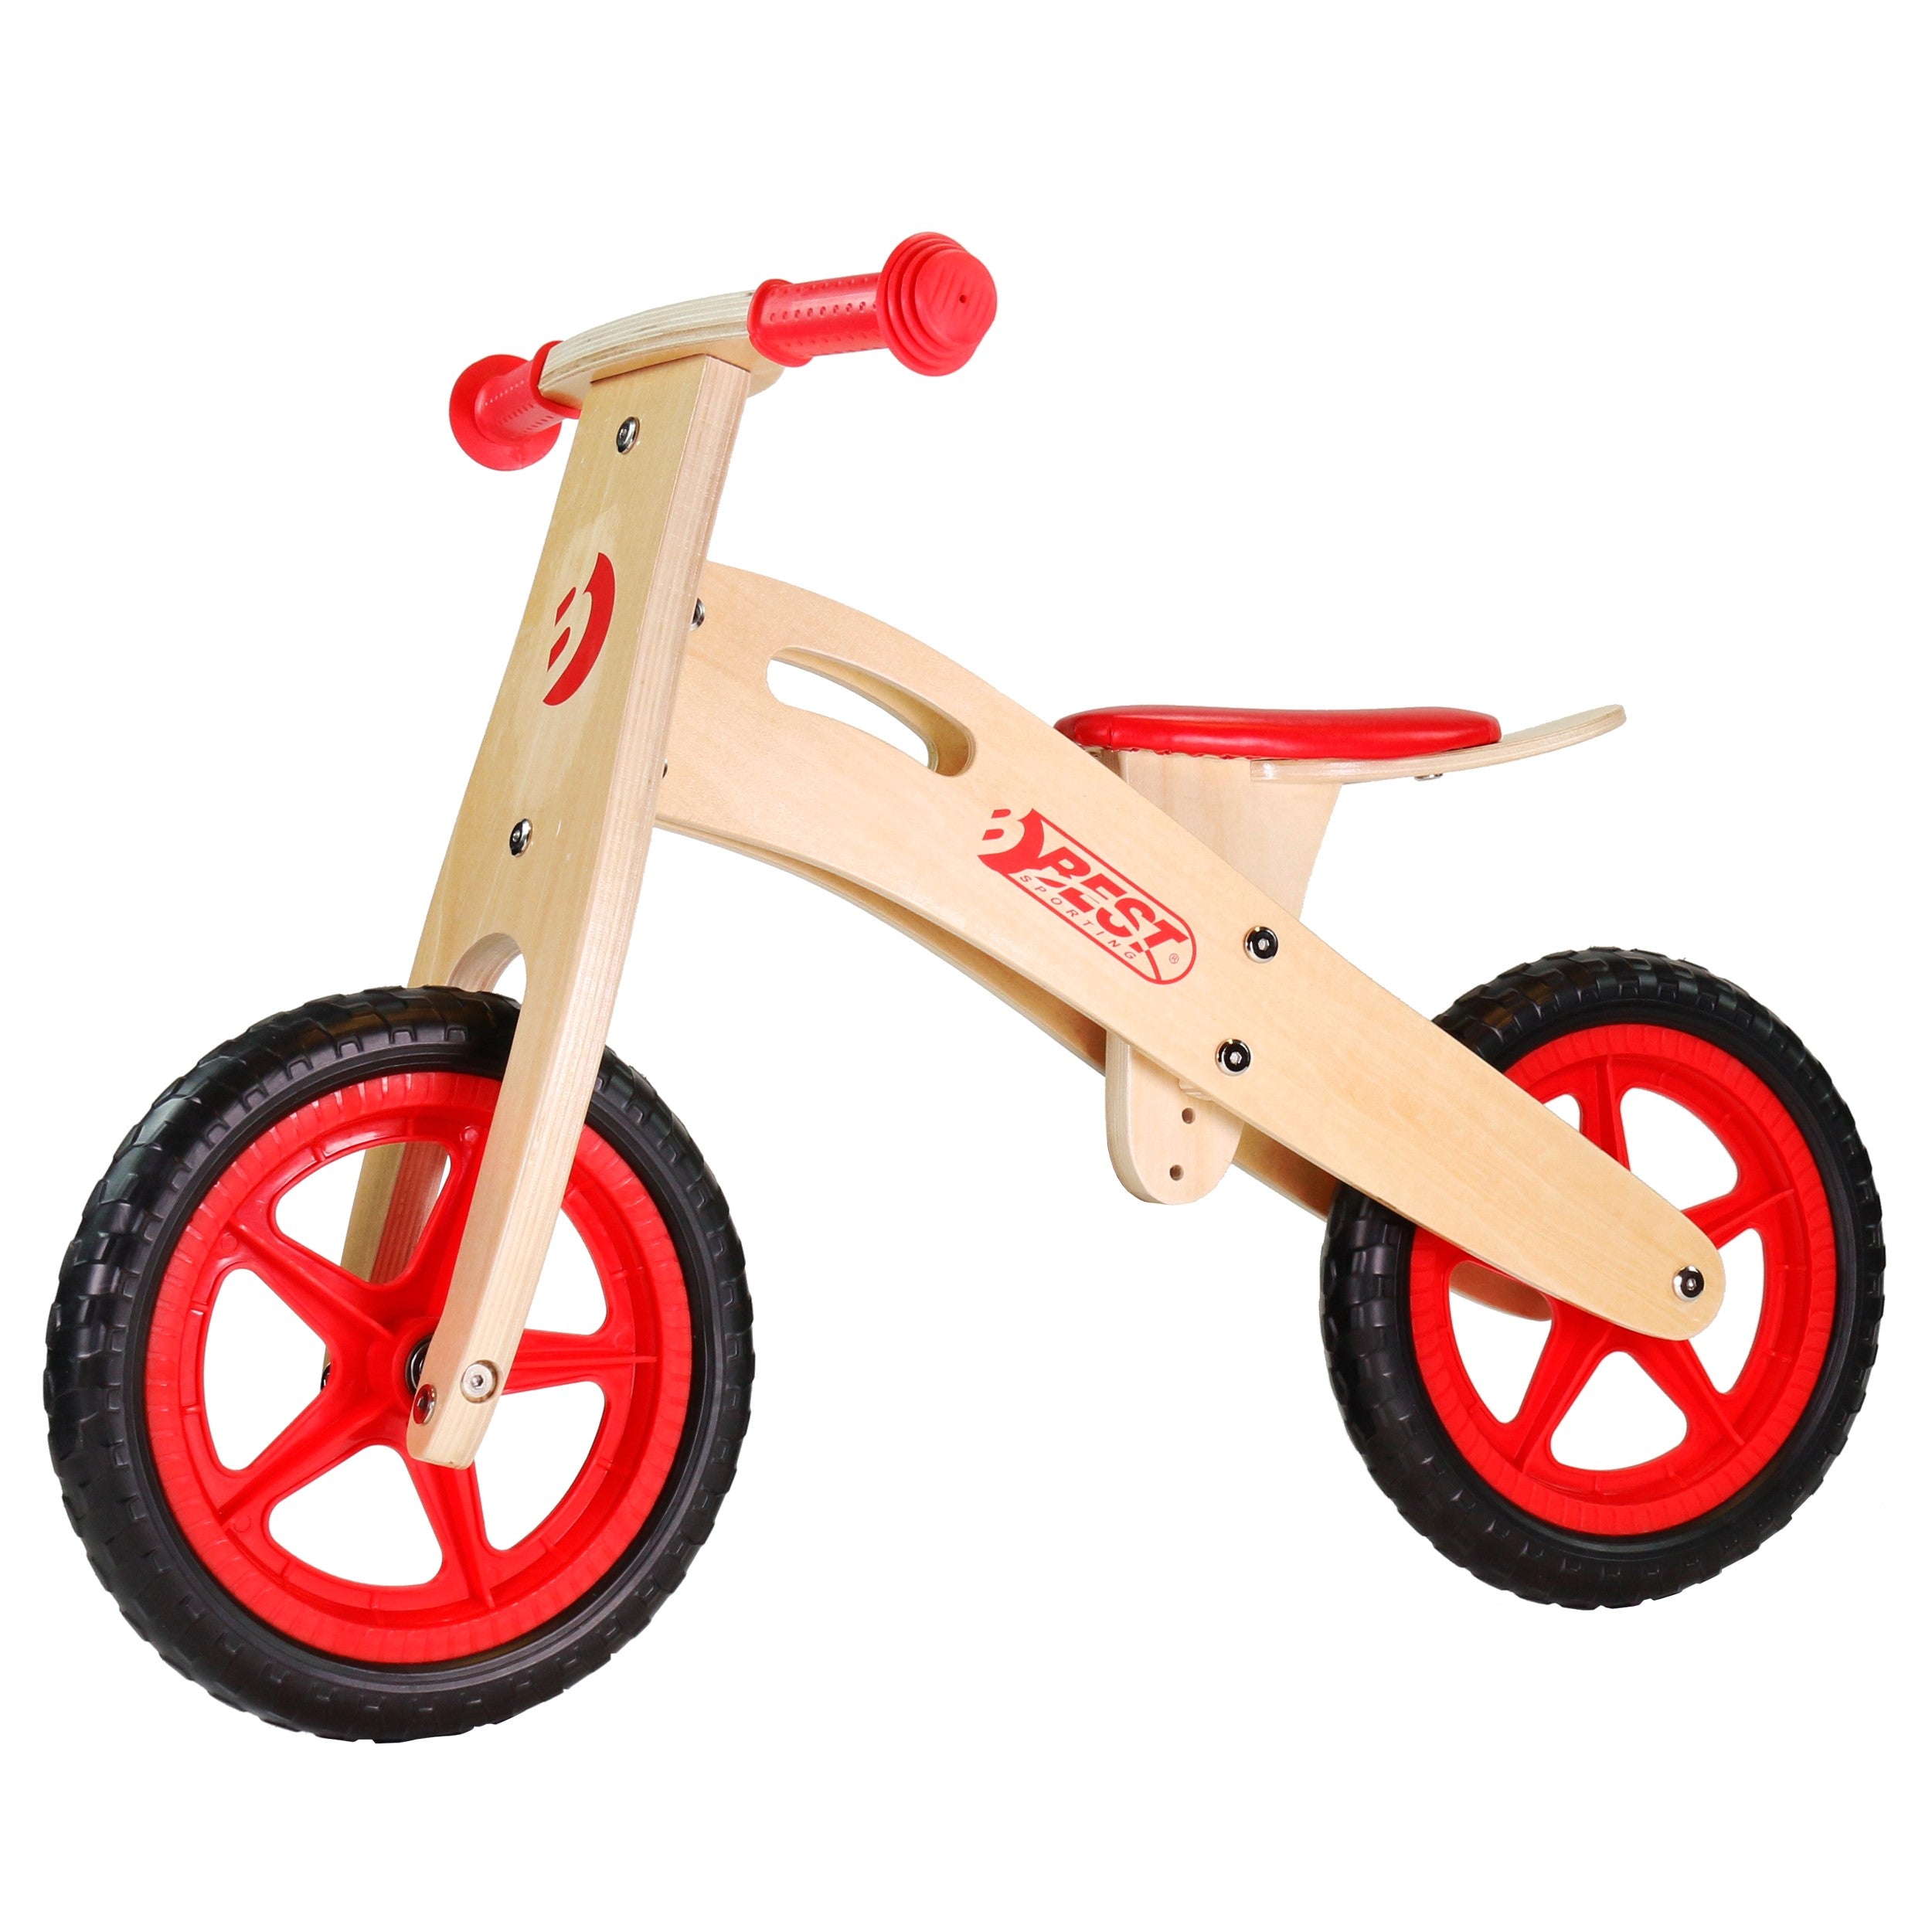 Balance bike made of wood